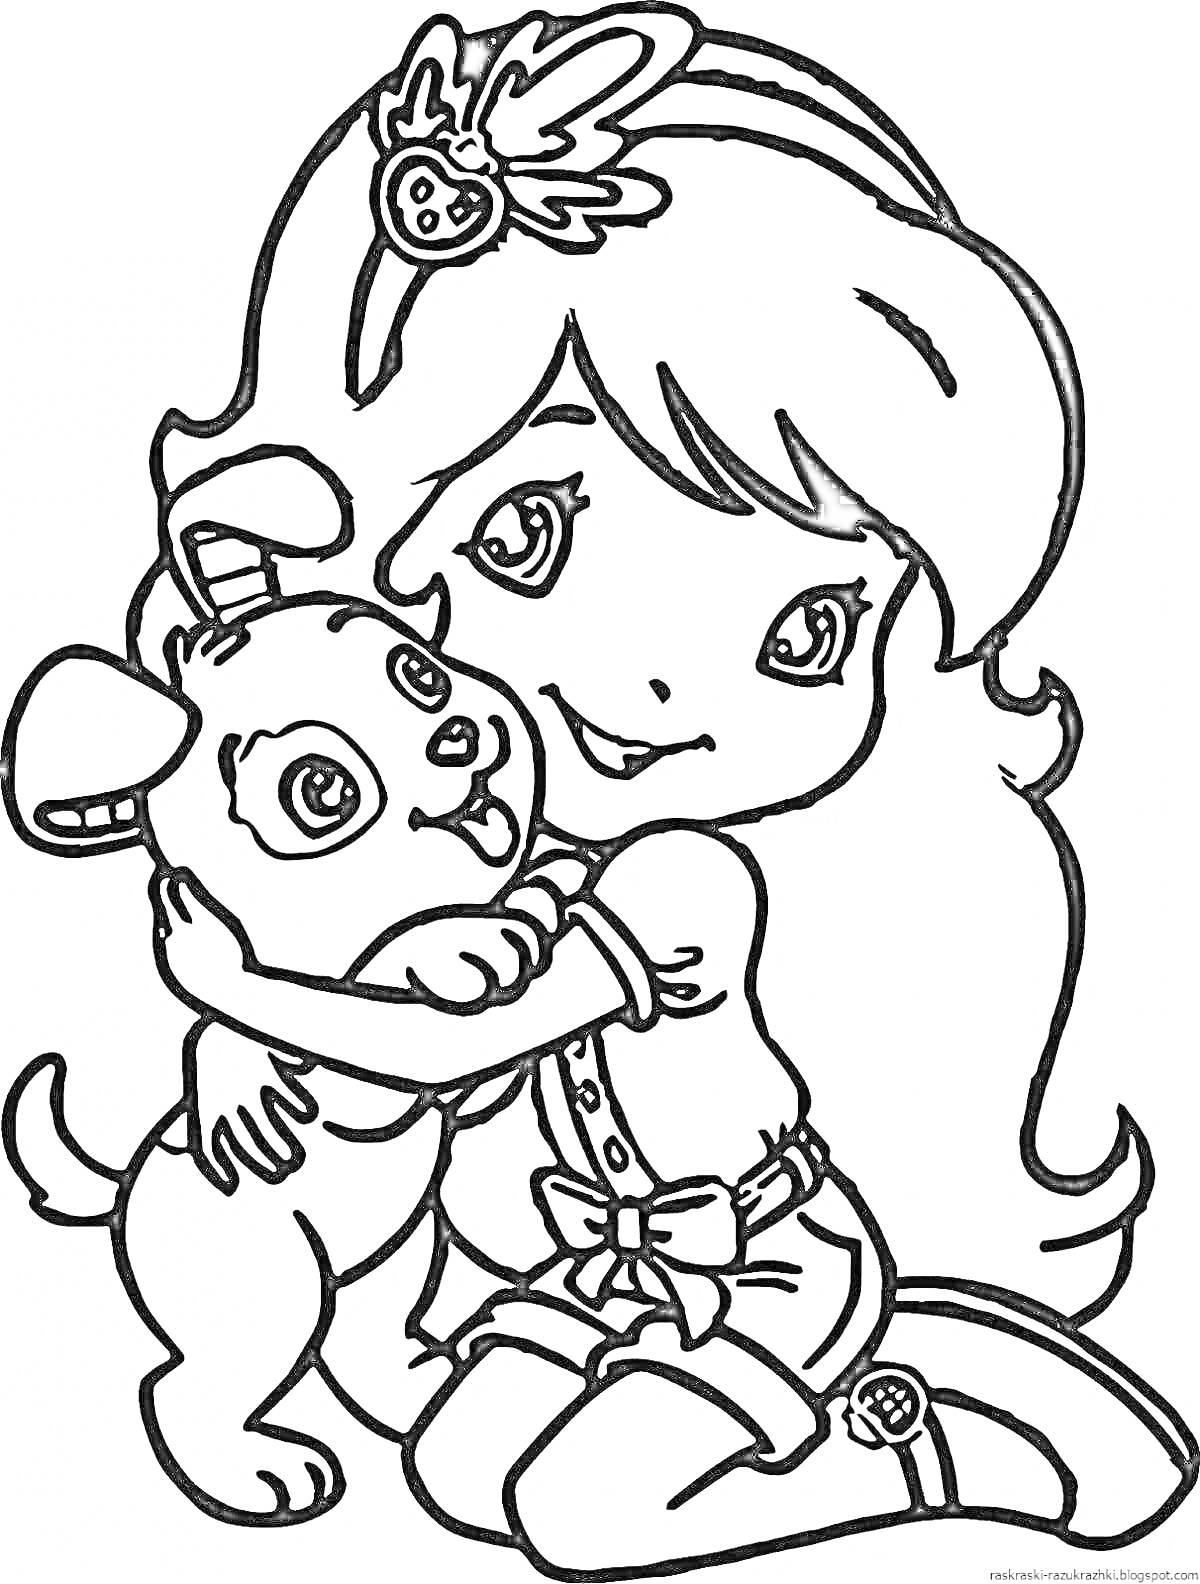 Раскраска Девочка с длинными волосами обнимает щенка, сидя на коленях, заколка в виде черепа-котенка в волосах